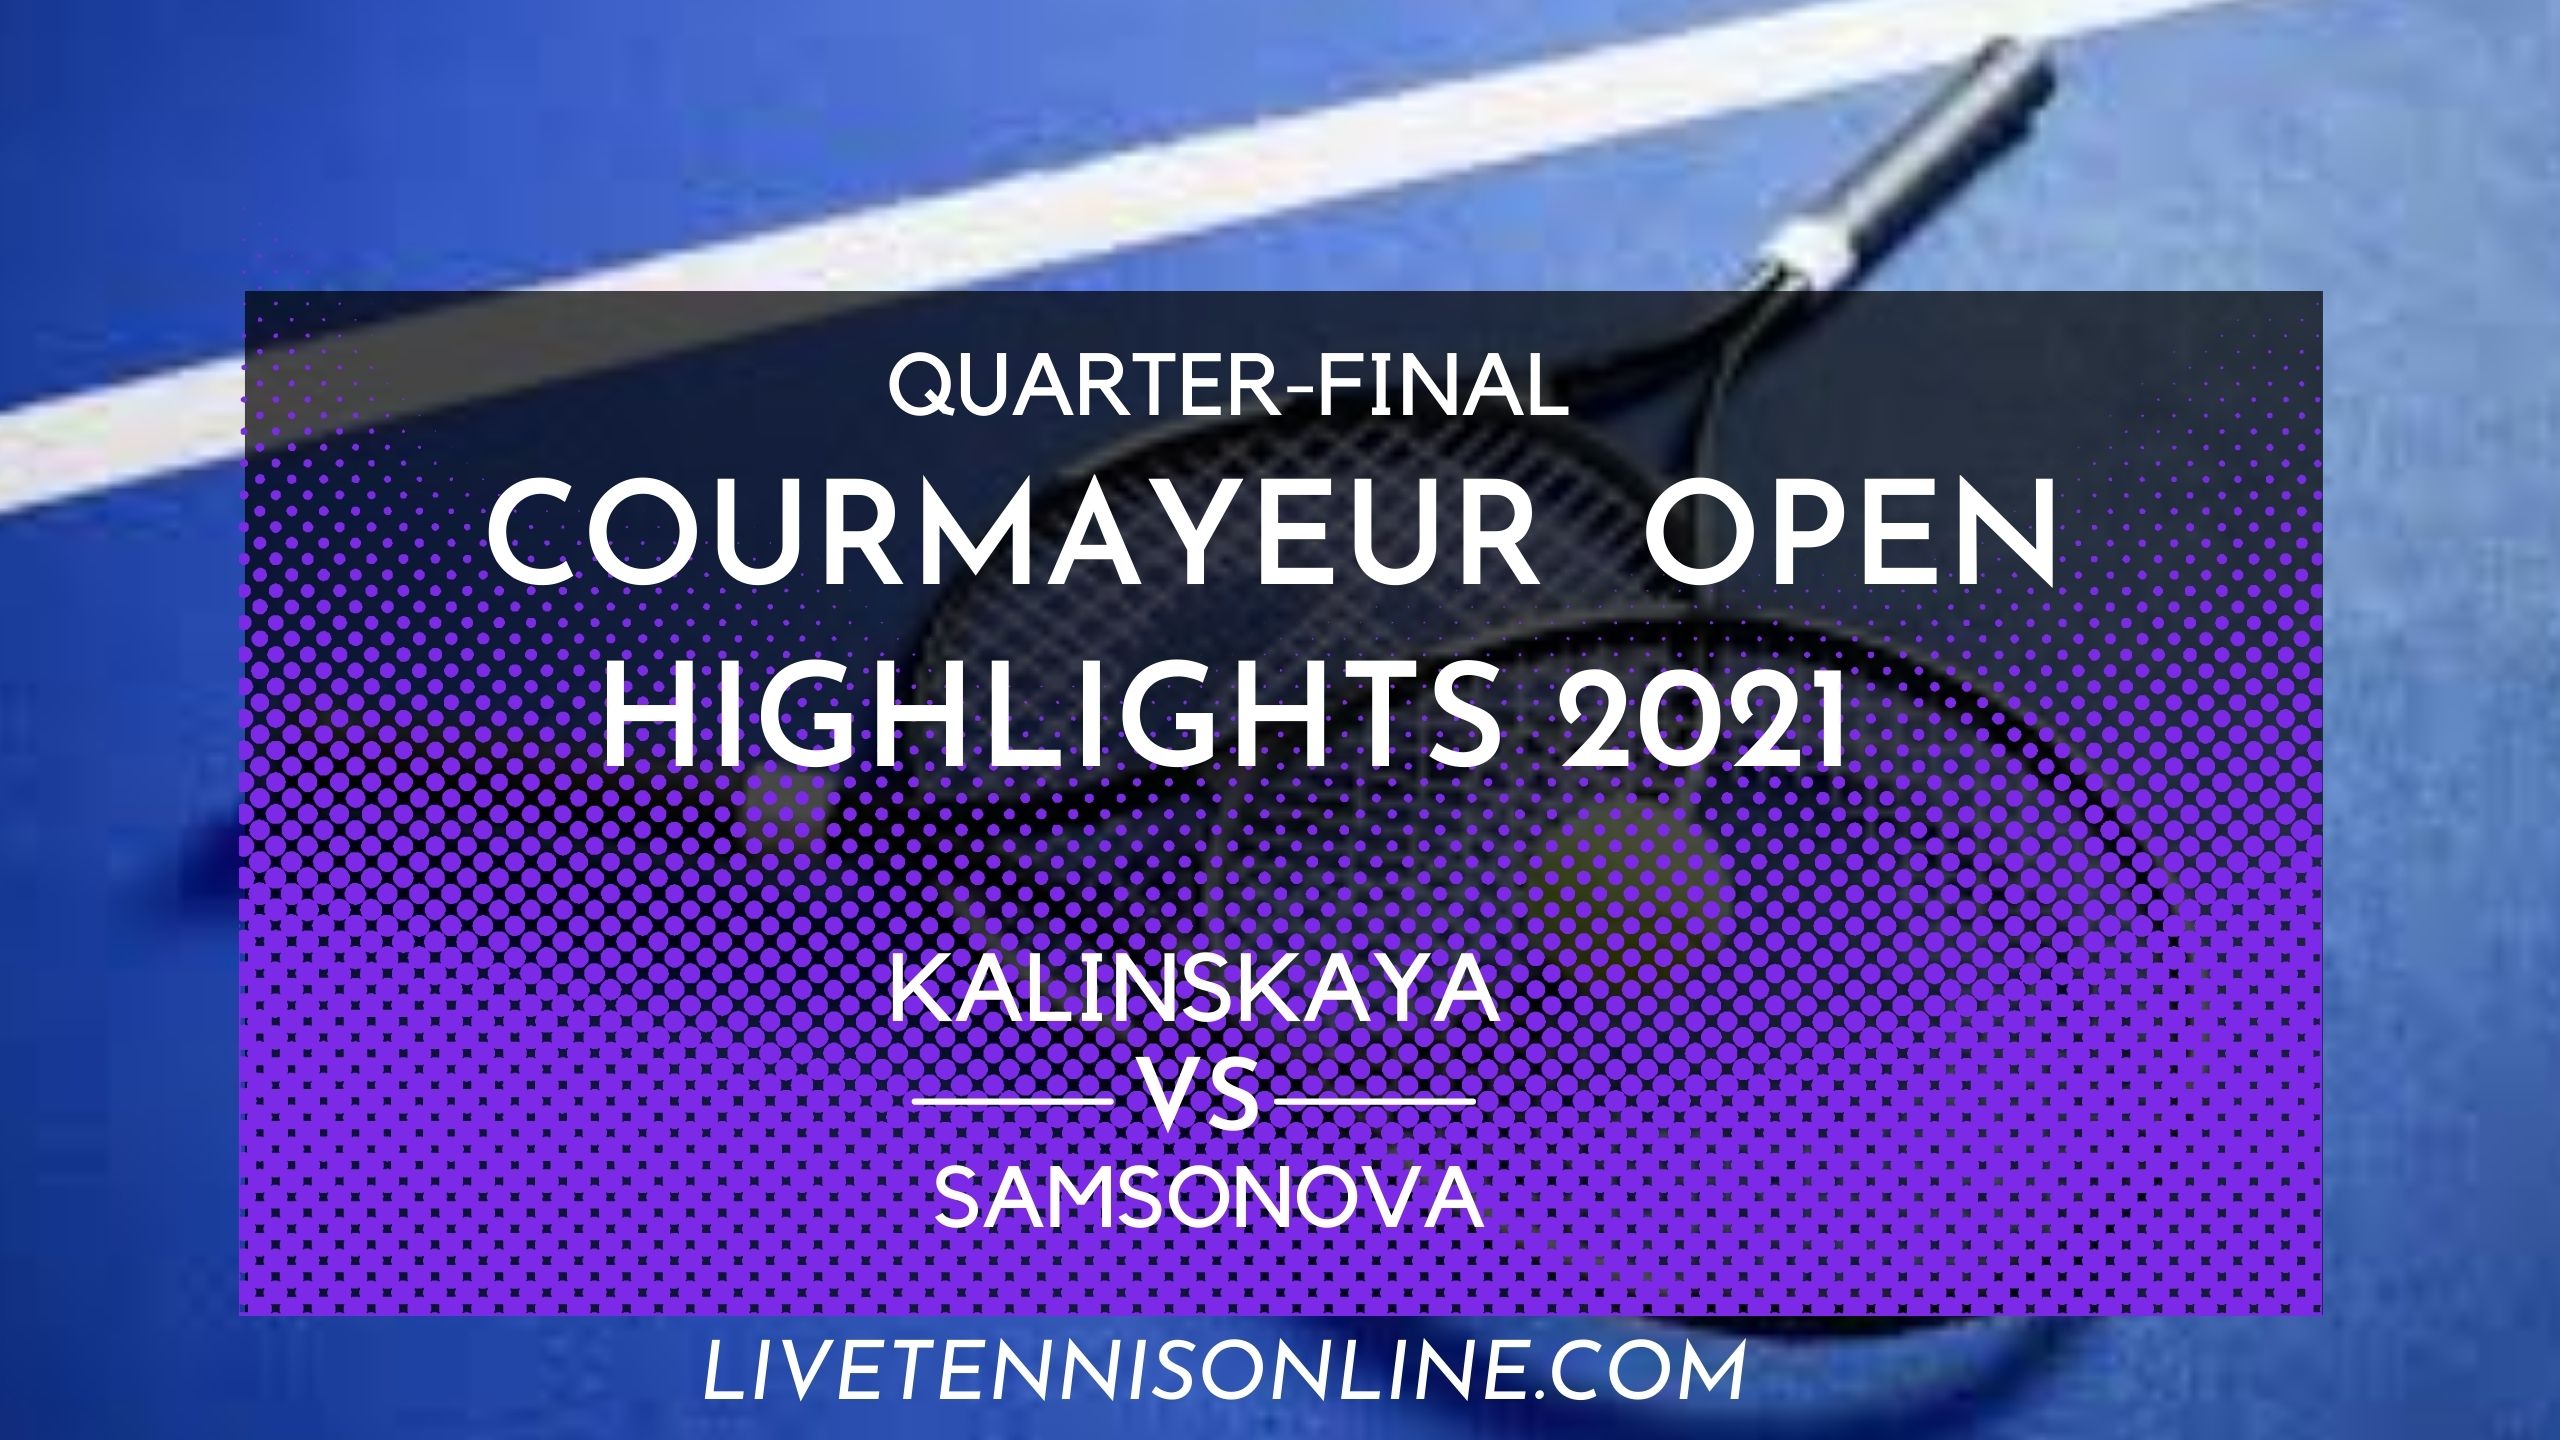 Kalinskaya Vs Samsonova QF Highlights 2021 Courmayeur Open